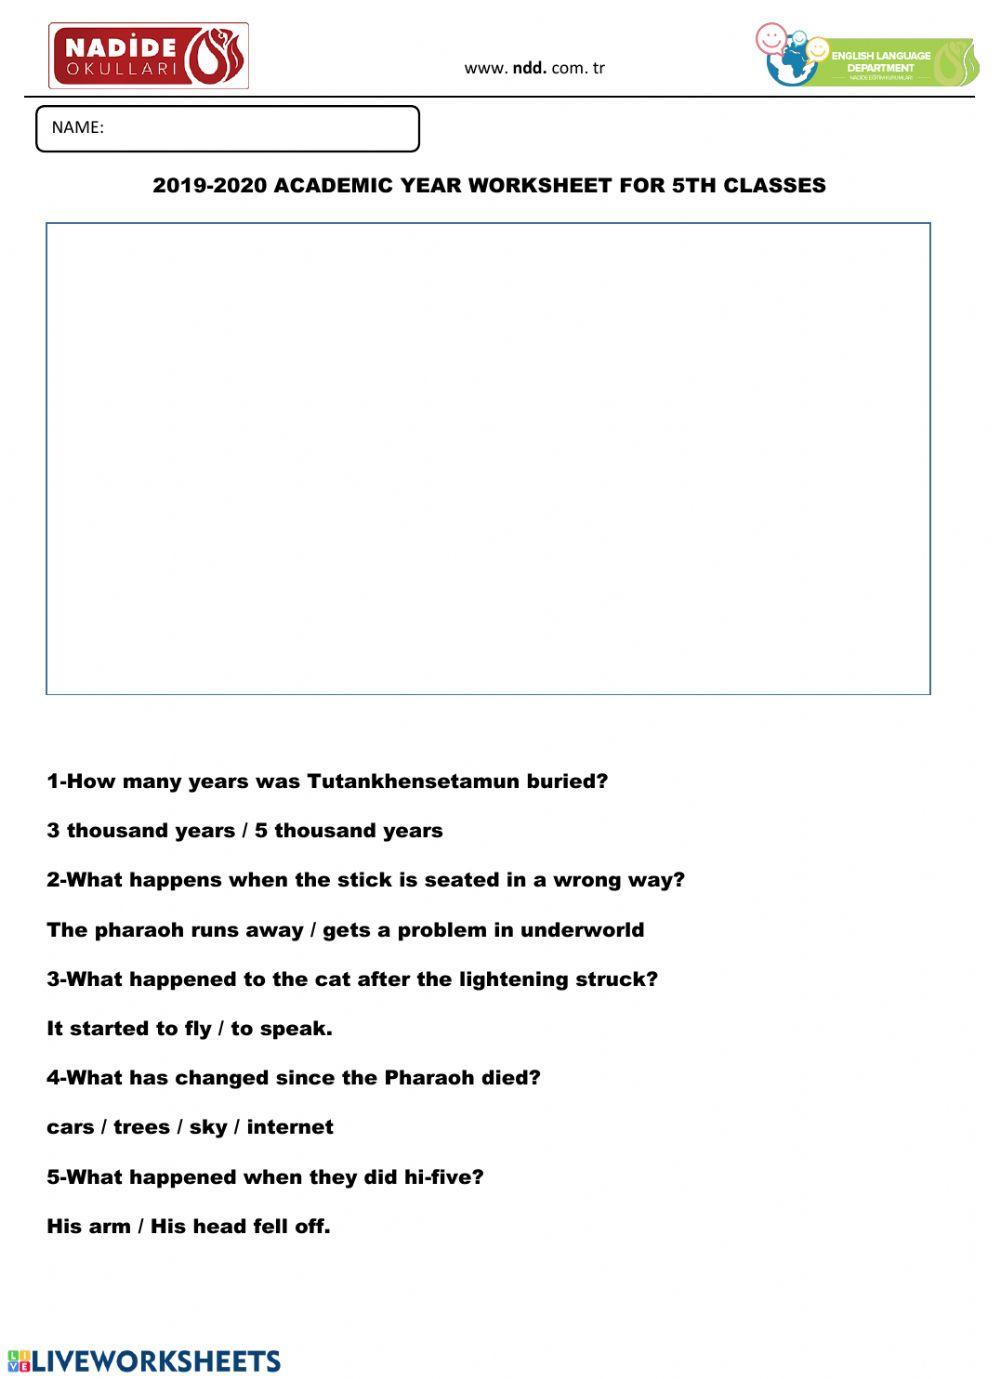 Video Worksheet-1 for 5th Grades